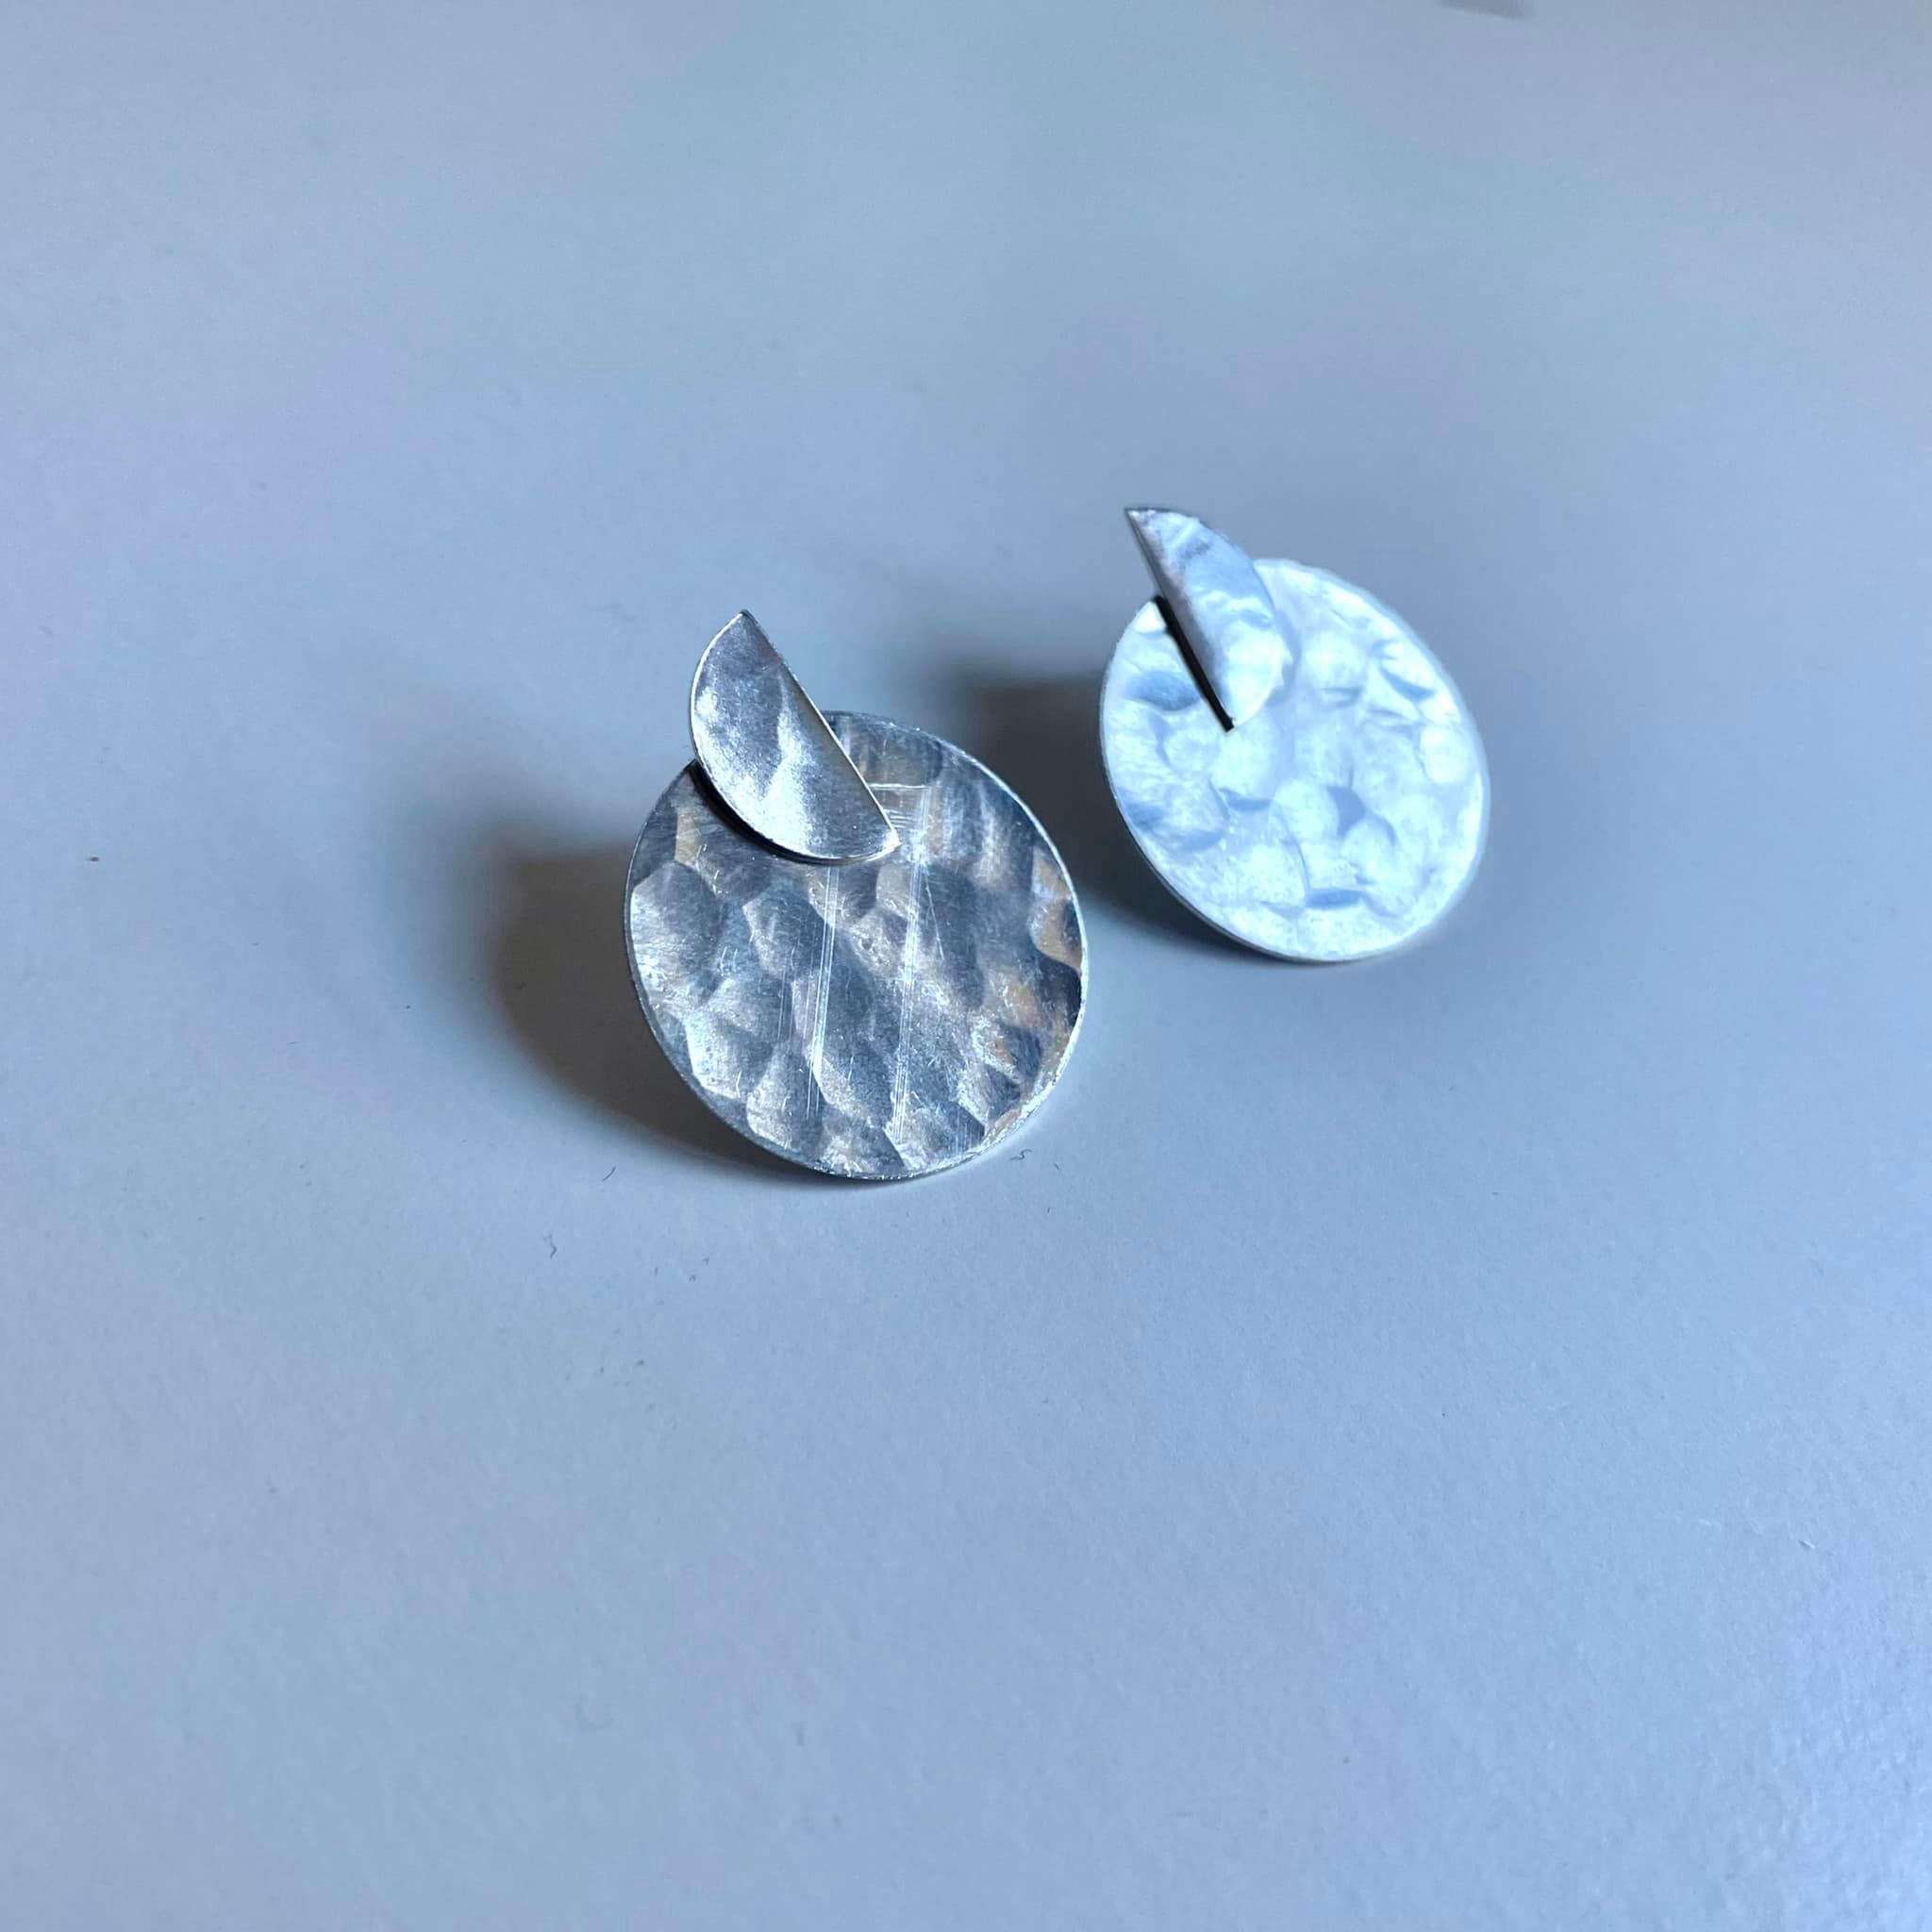 Half Moon Silver Ear Jacket Earrings - Hammered Finish - Nickel Free